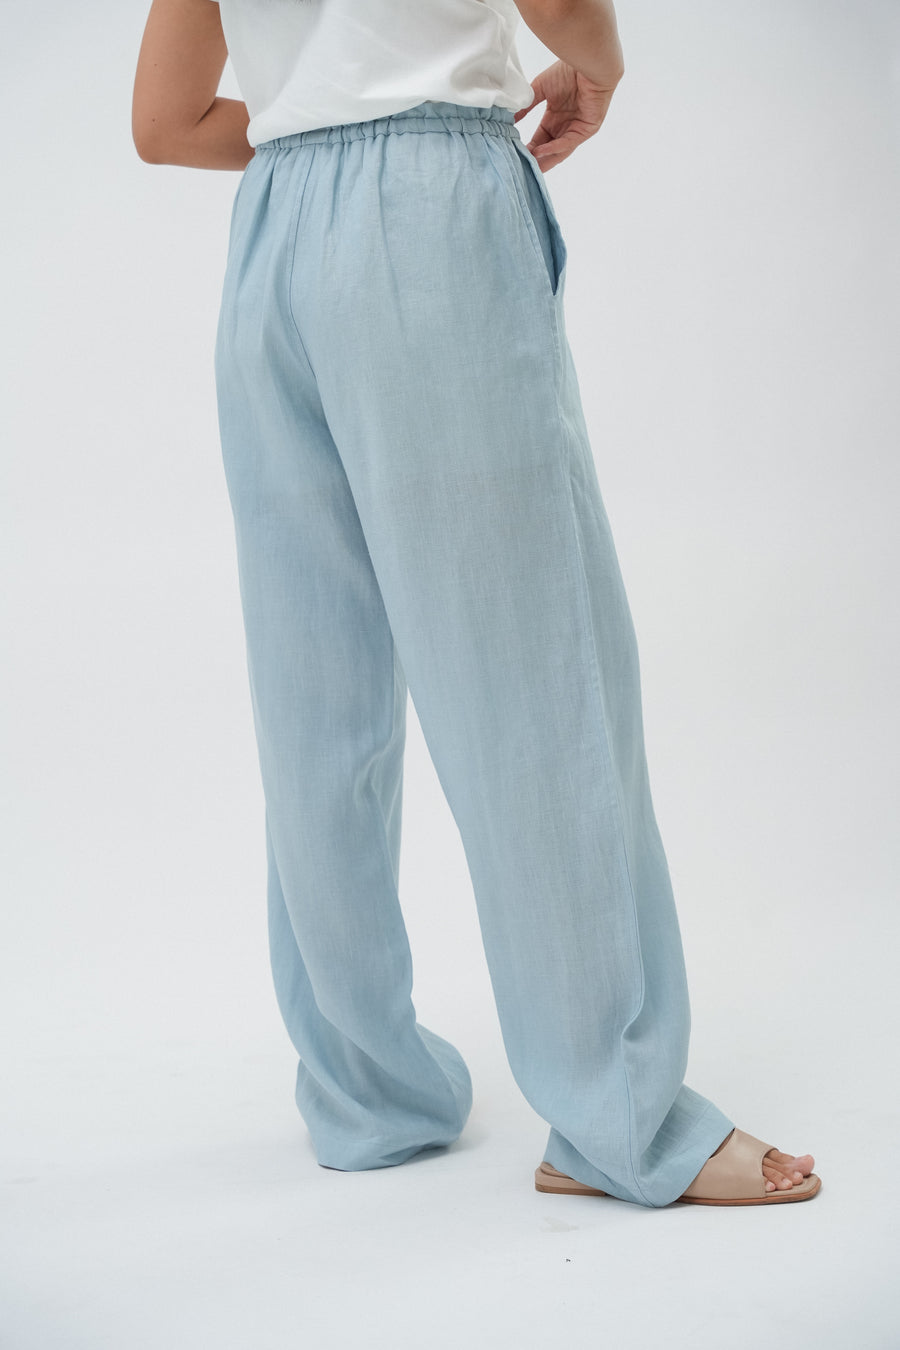 Brunch Linen Pants in Coral Blue